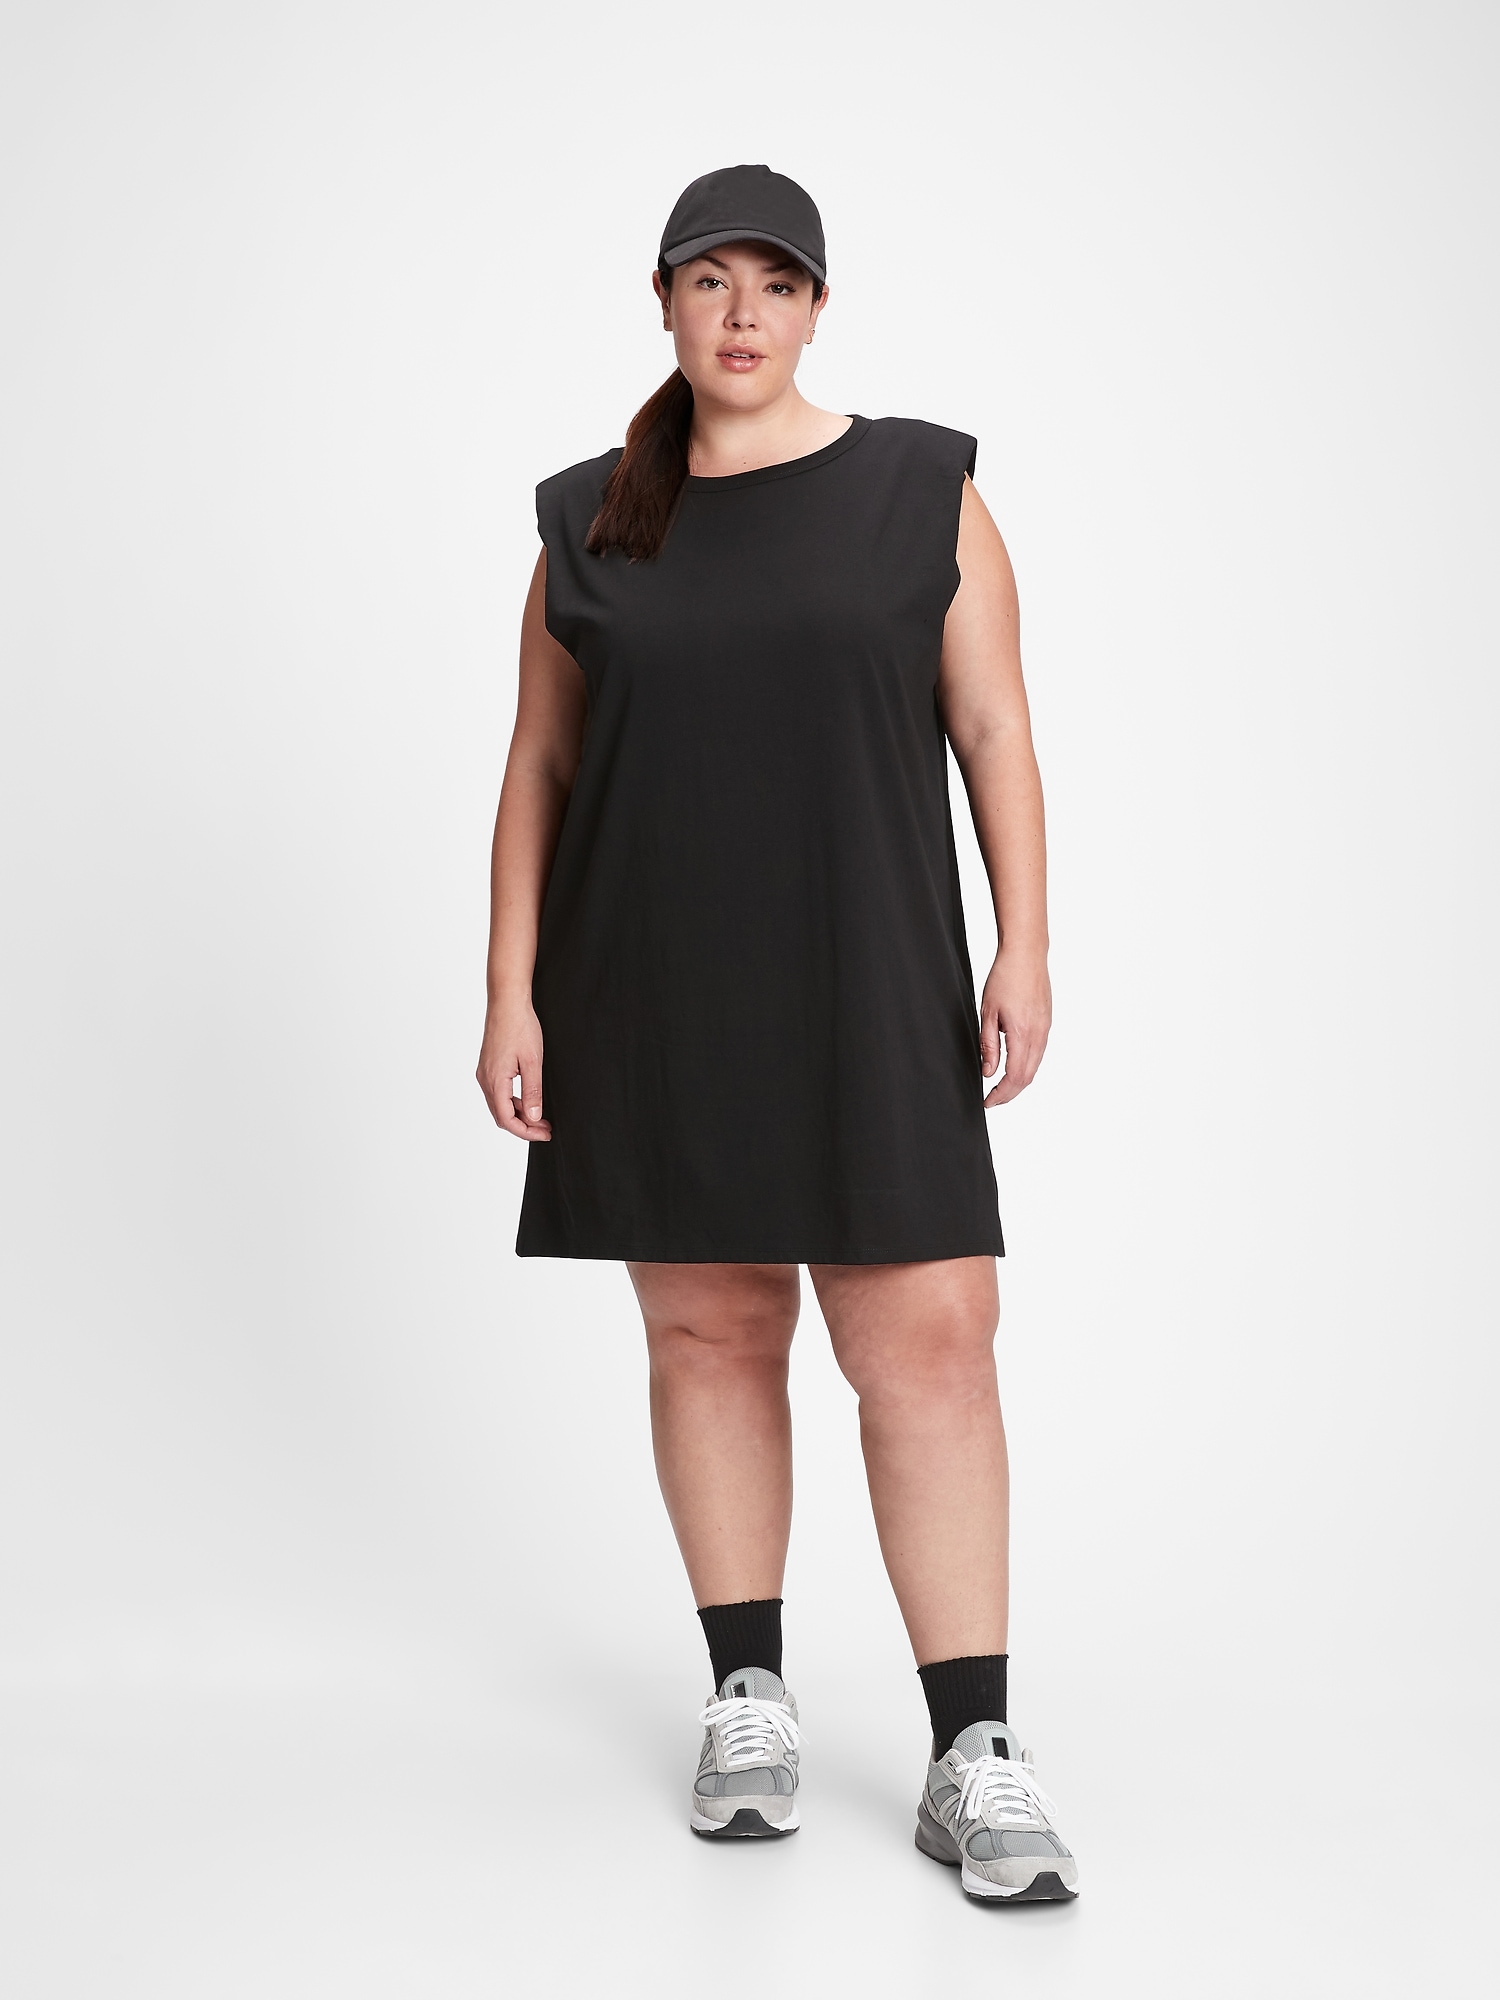 Muscle Tank Dress | Gap